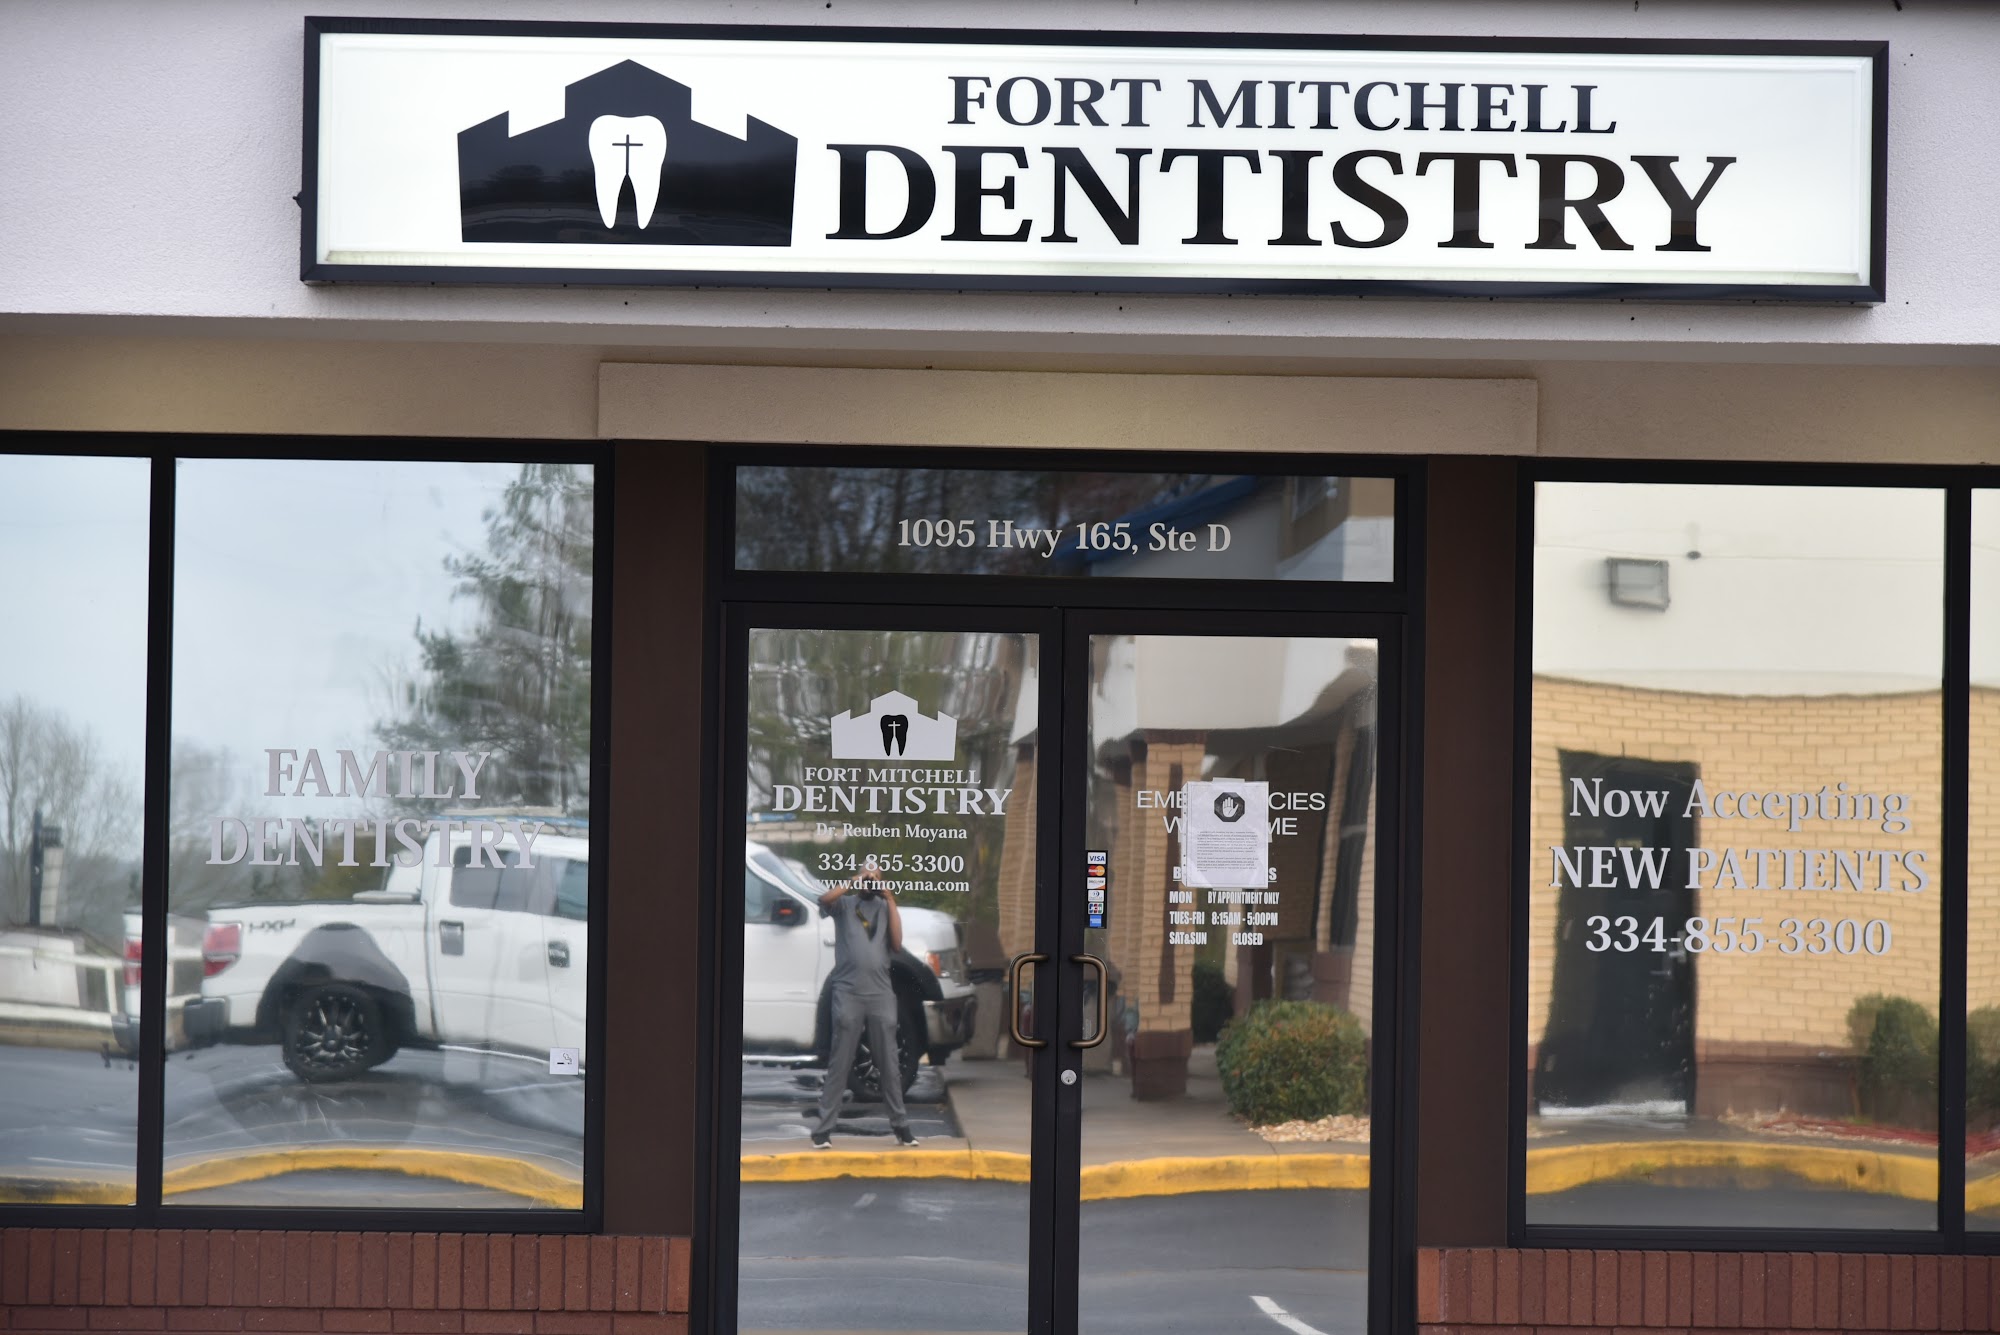 Fort Mitchell Dentistry - Reuben Moyana D.M.D 1095 AL-165 d, Fort Mitchell Alabama 36856